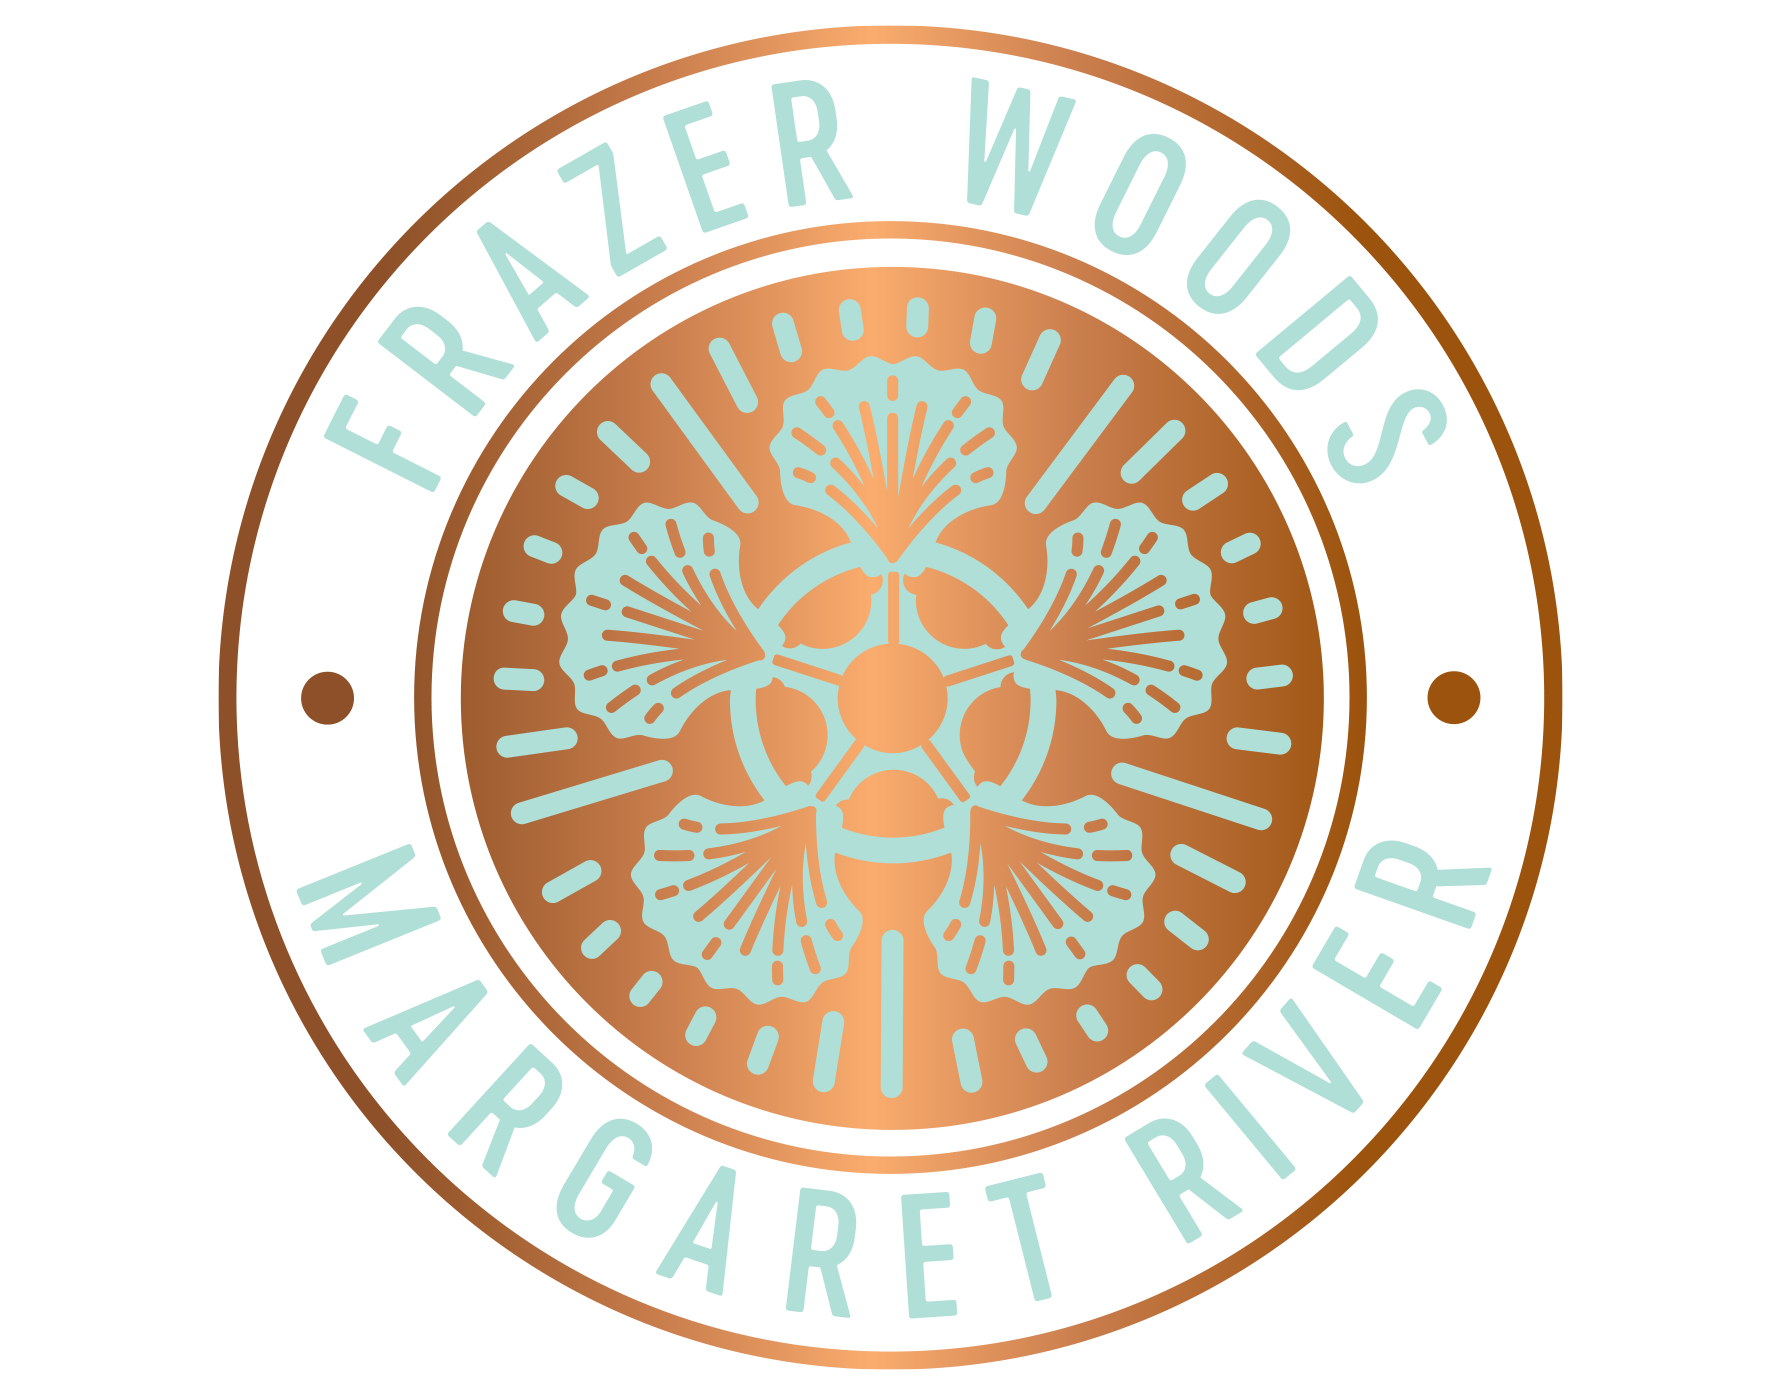 Frazer Woods logo